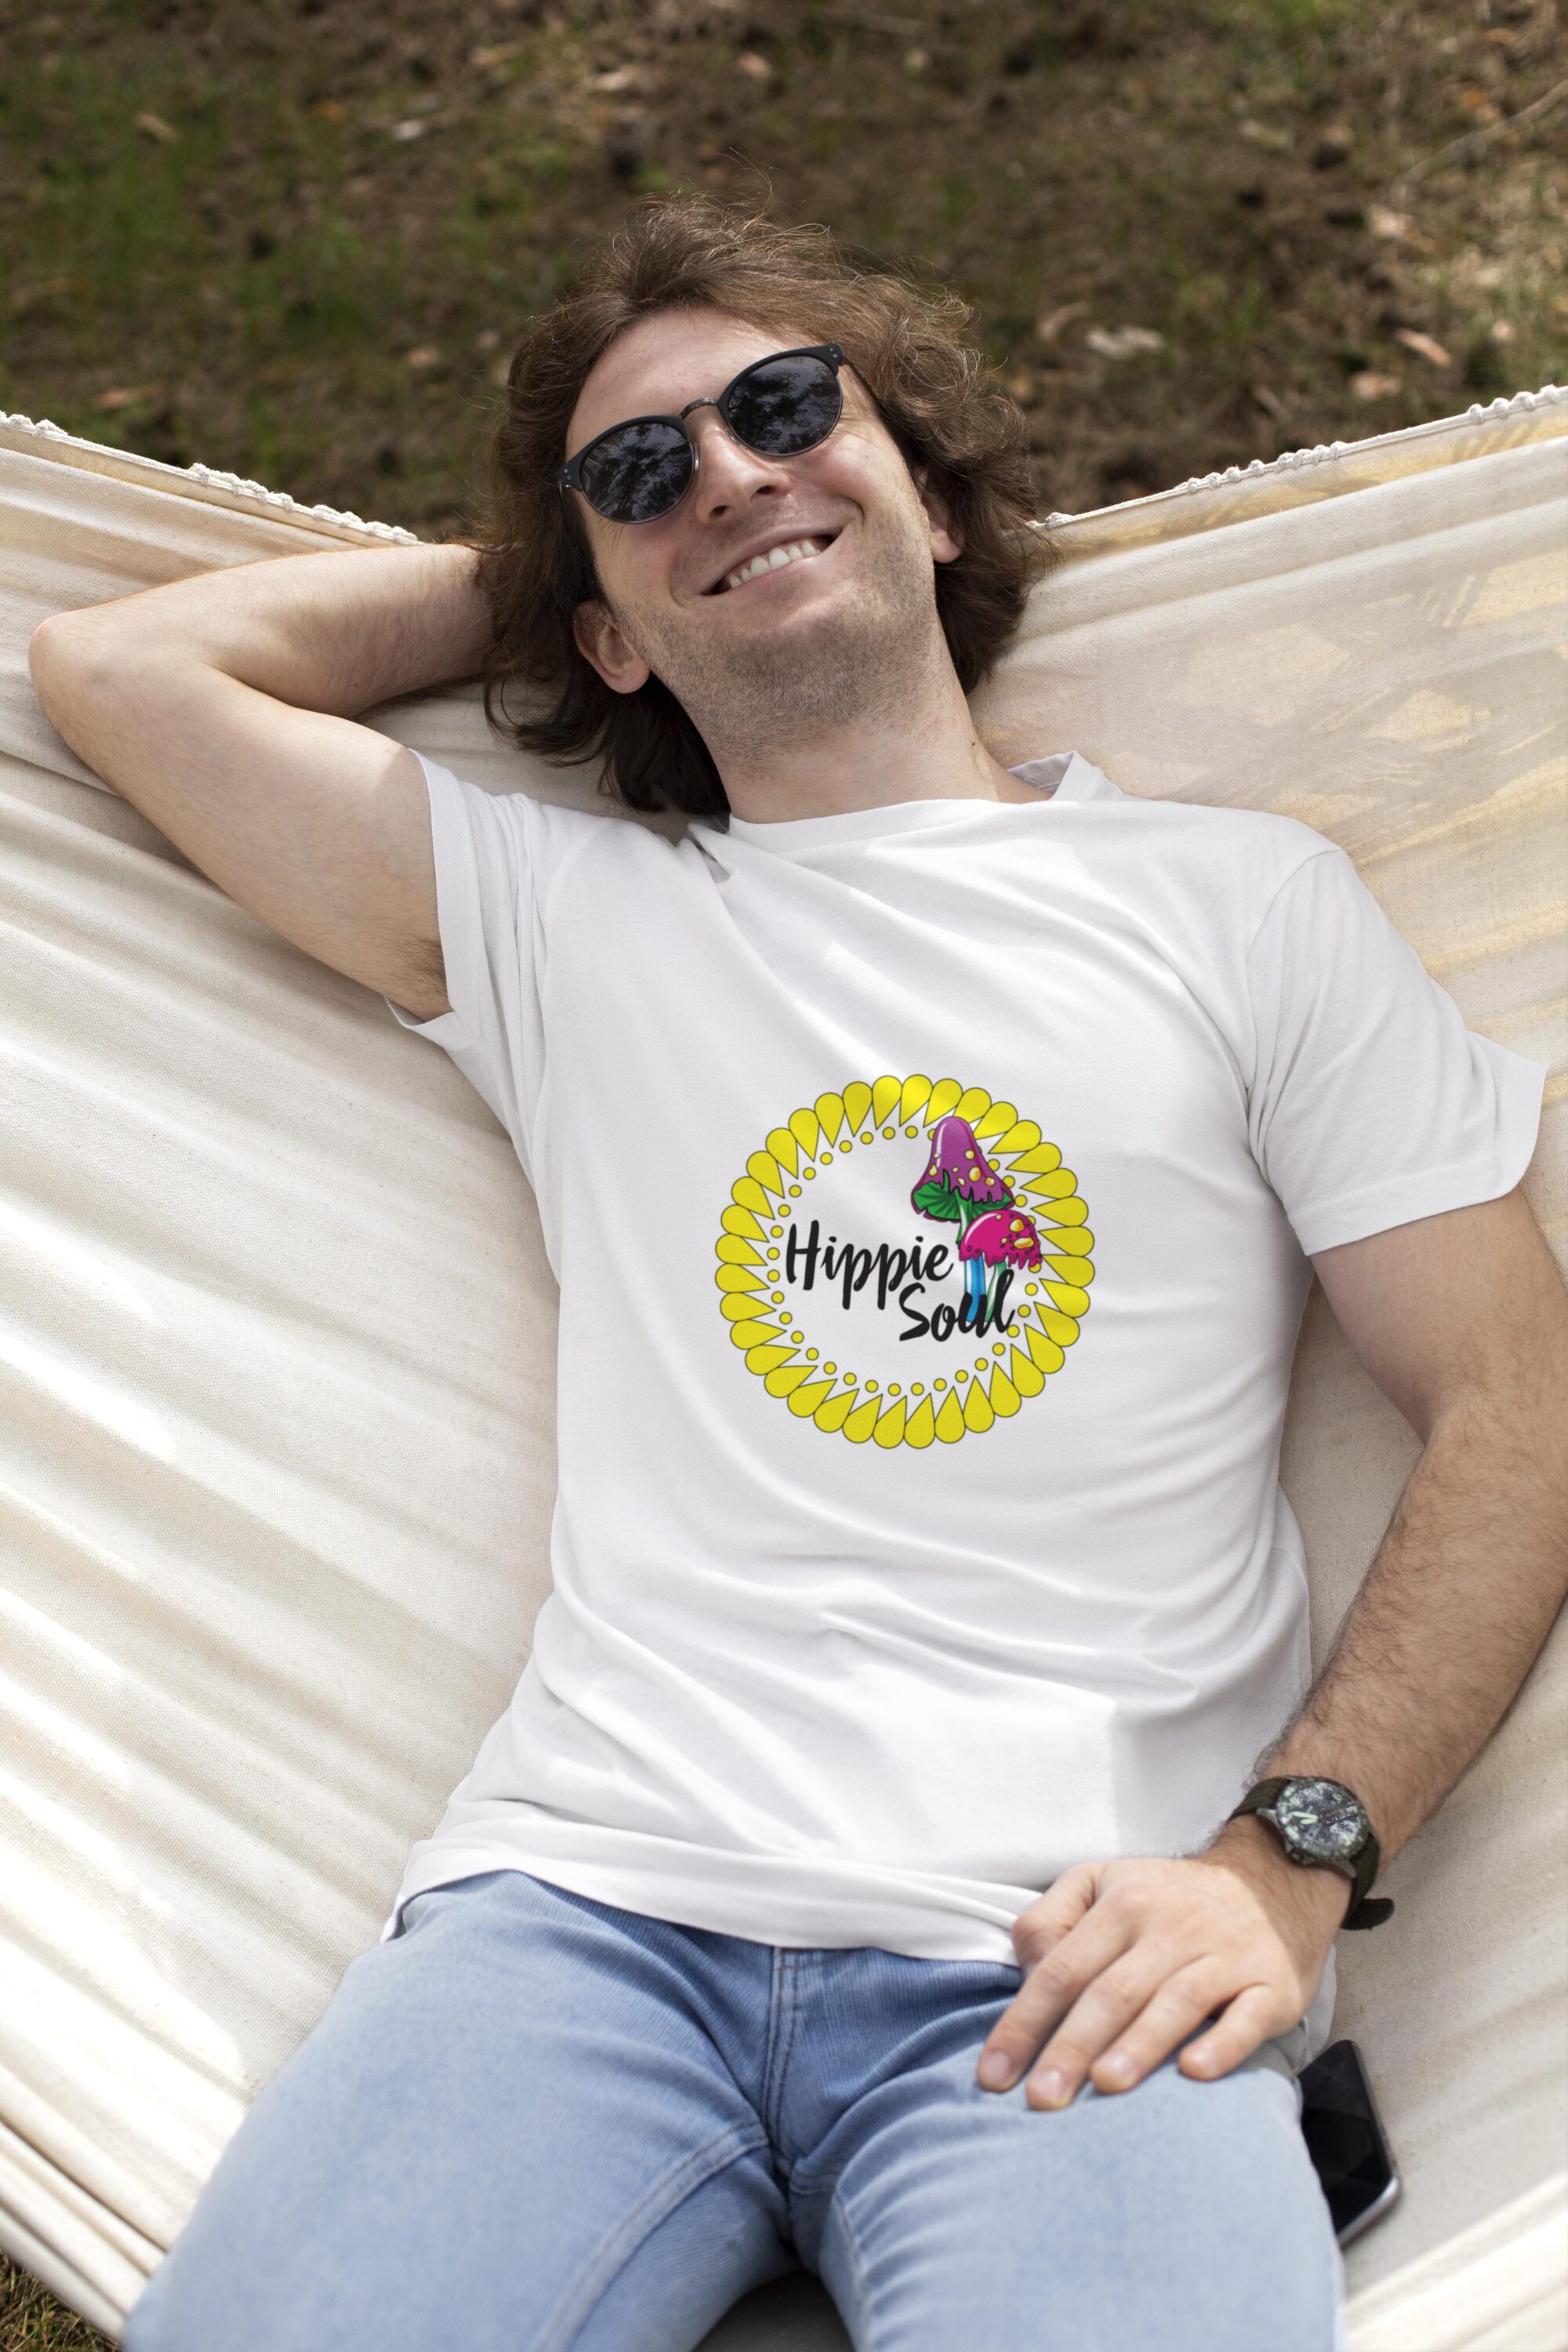 Hippie soul element on the t-shirt design.